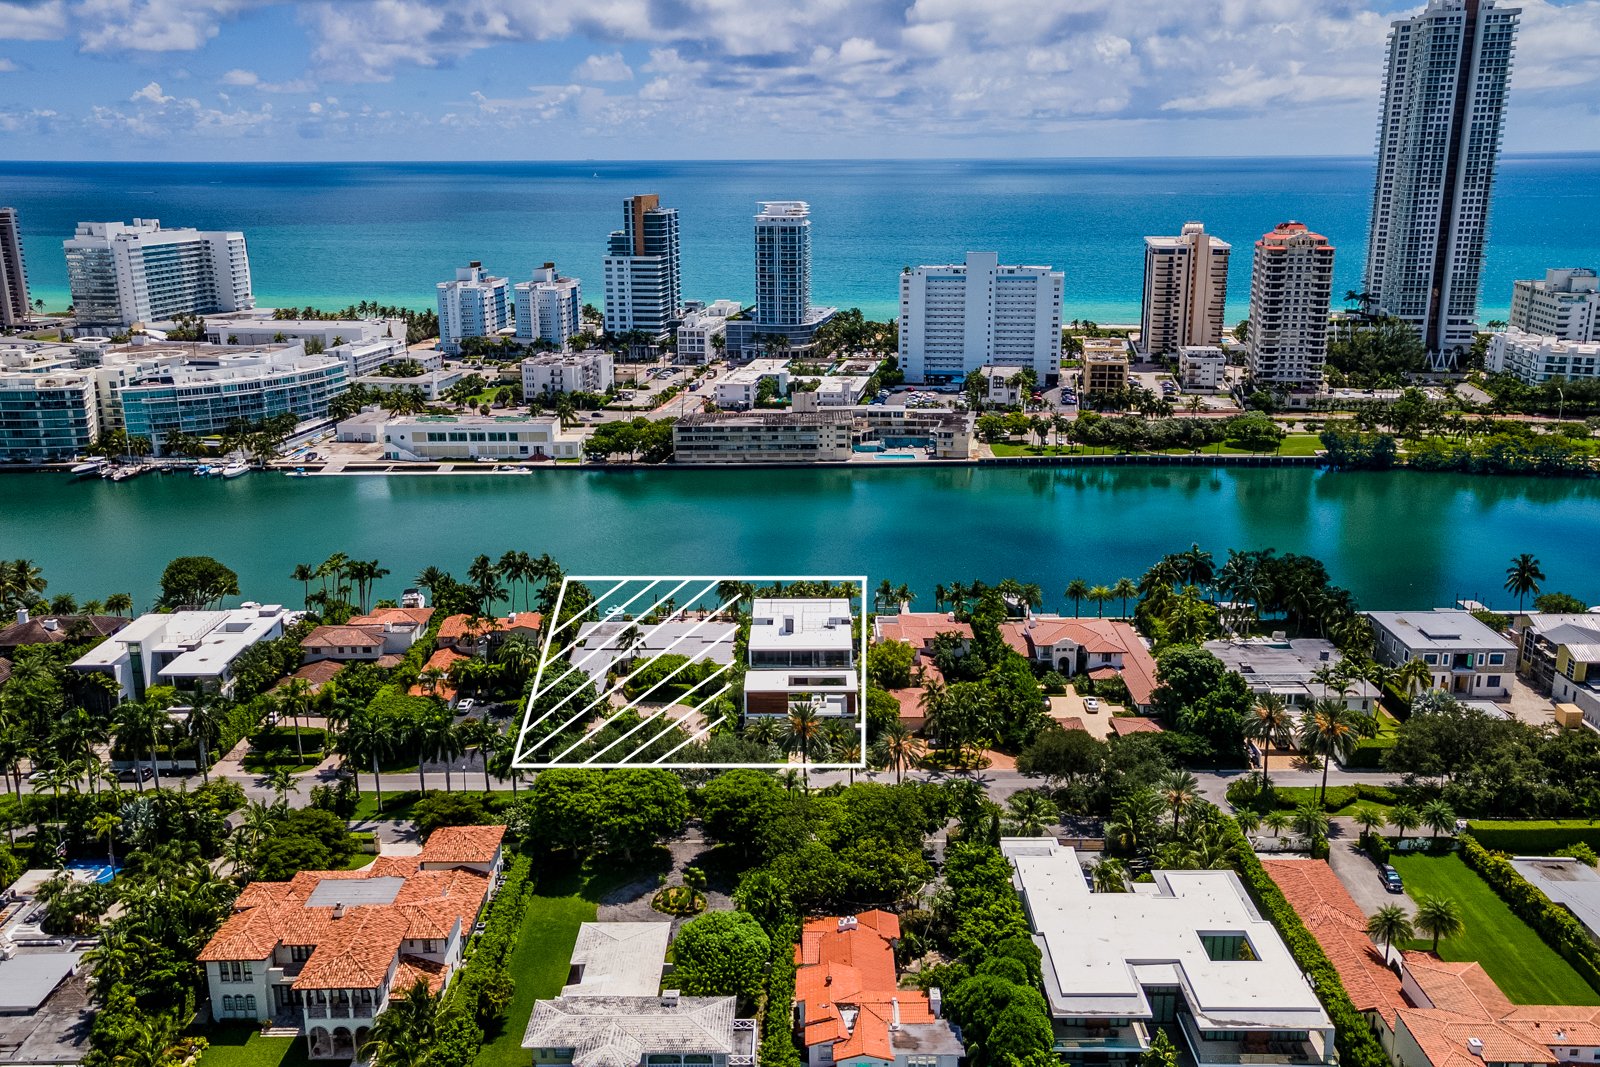 Grammy Award-Winning Rapper Future Buys Allison Island Home For $16.3 Million On Miami Beach 34.jpg